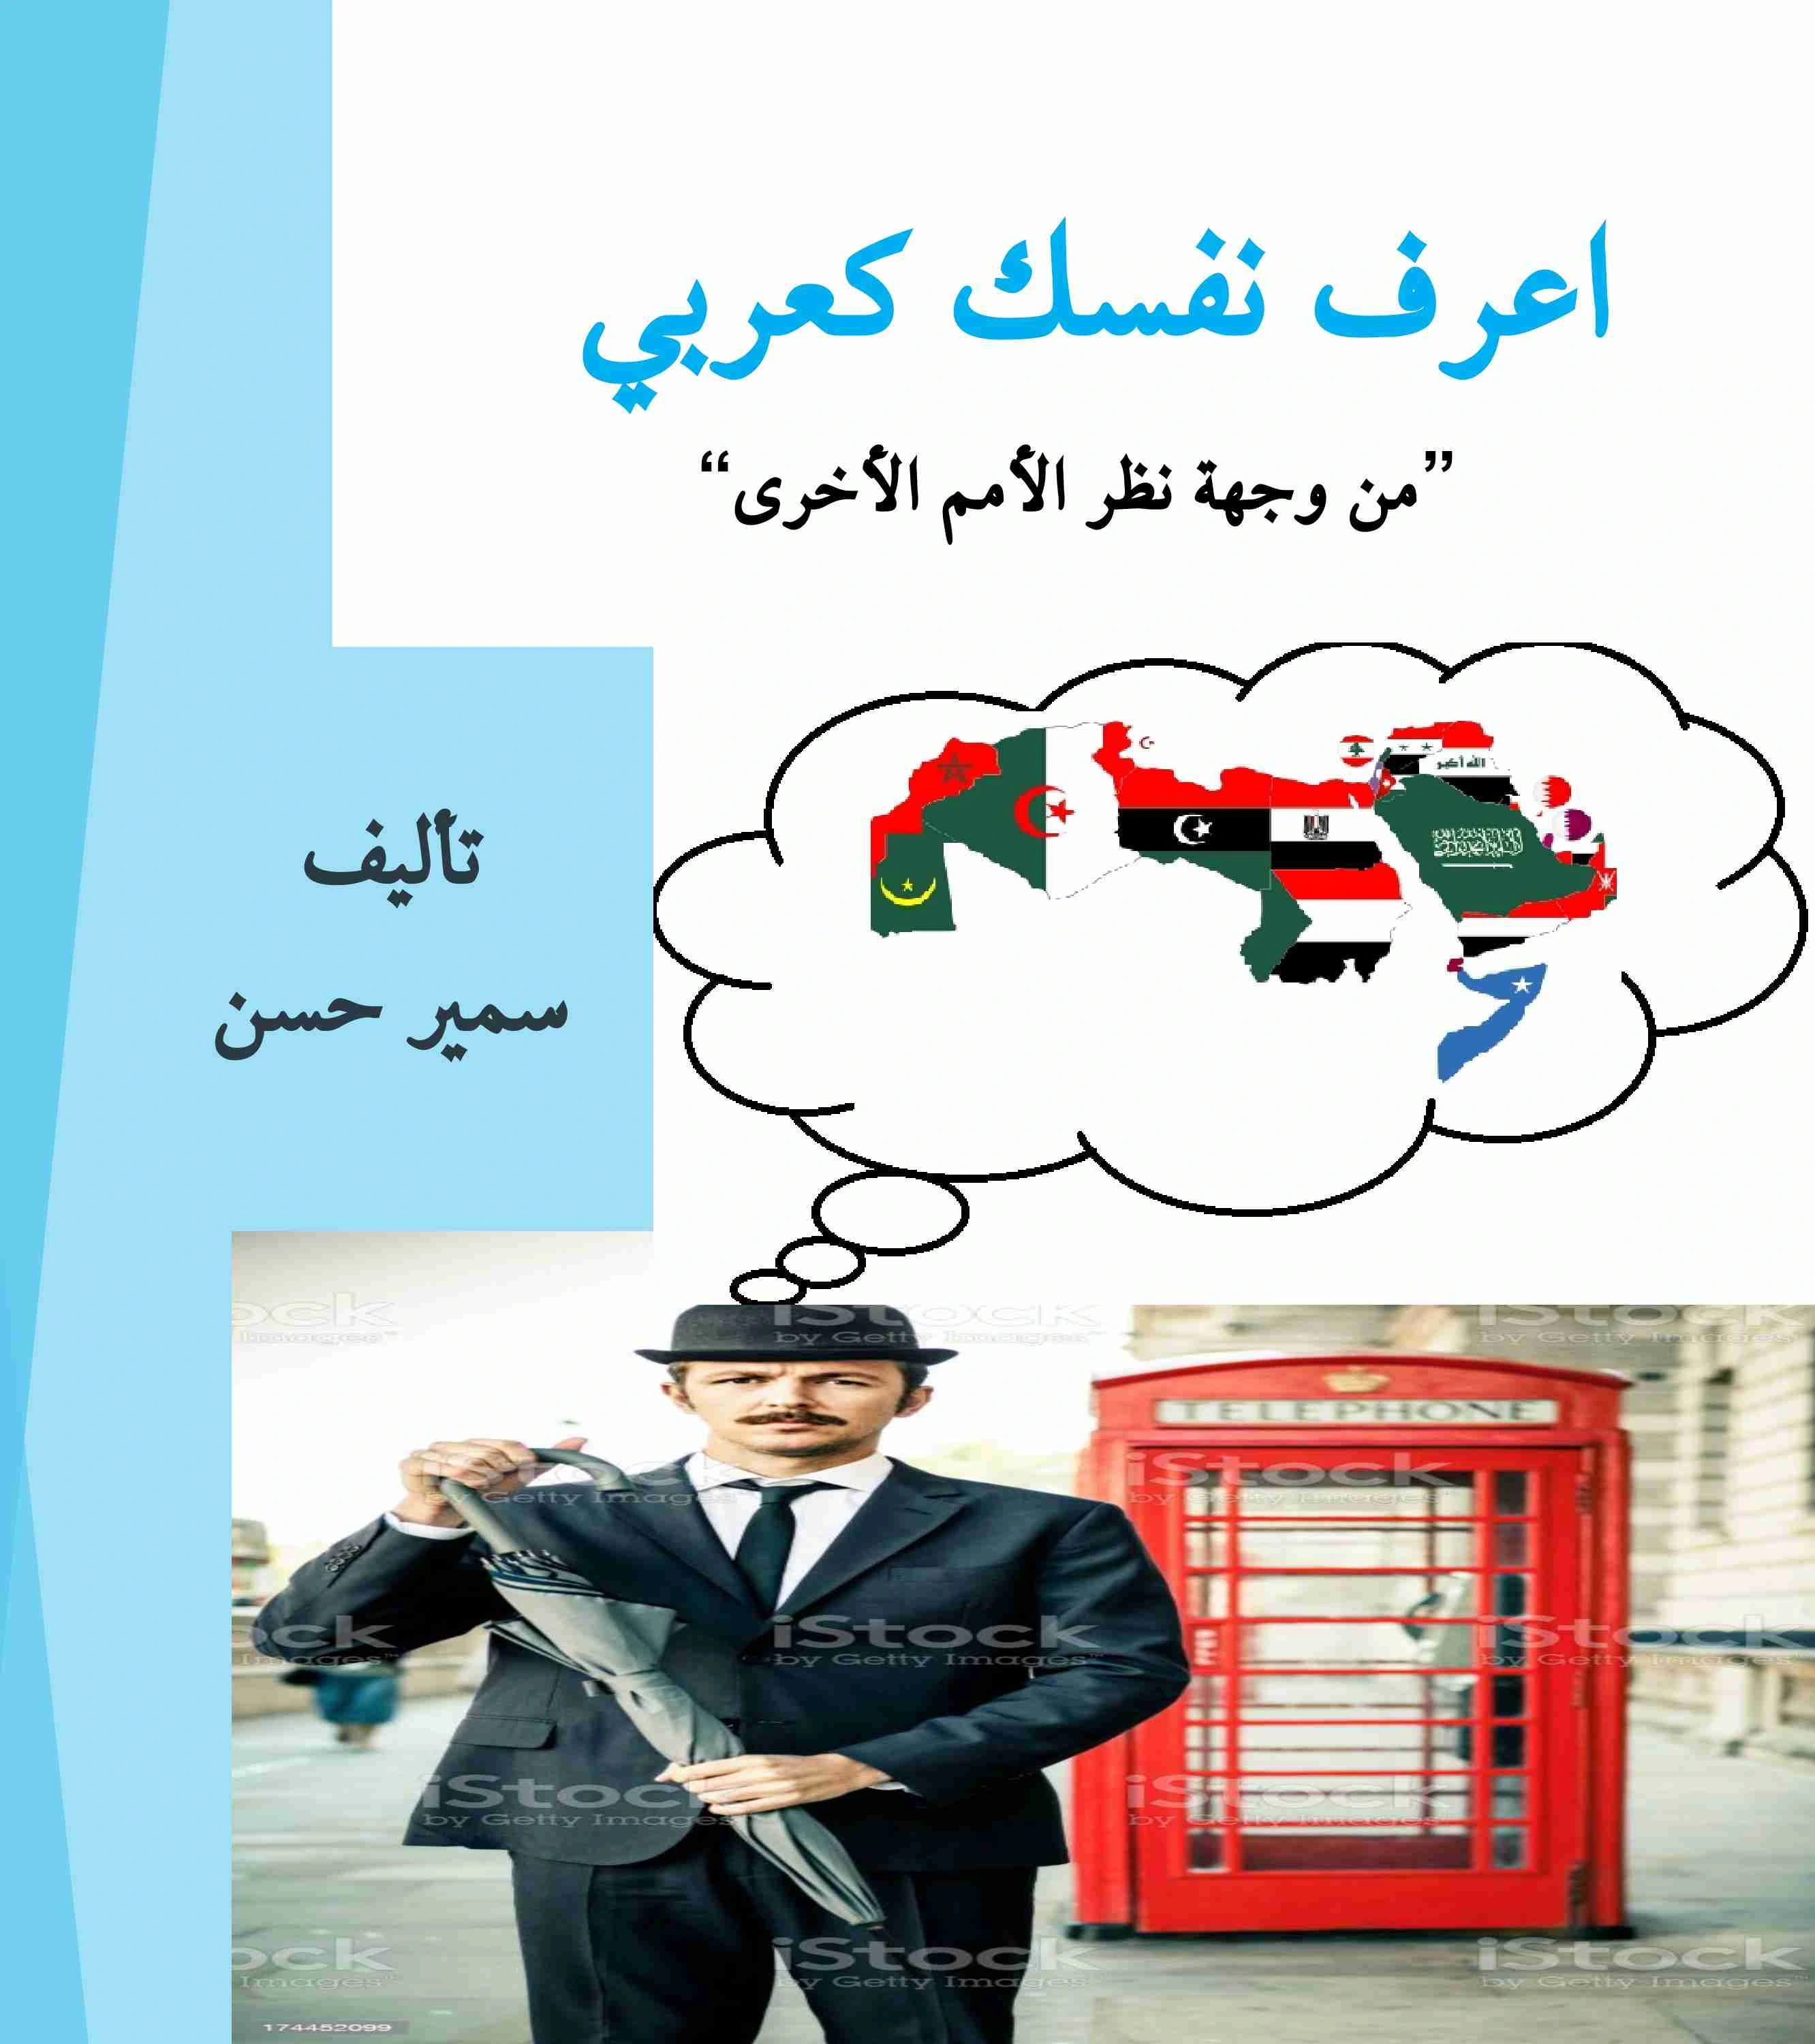 تحميل و قراءة كتاب اعرف نفسك كعربي pdf